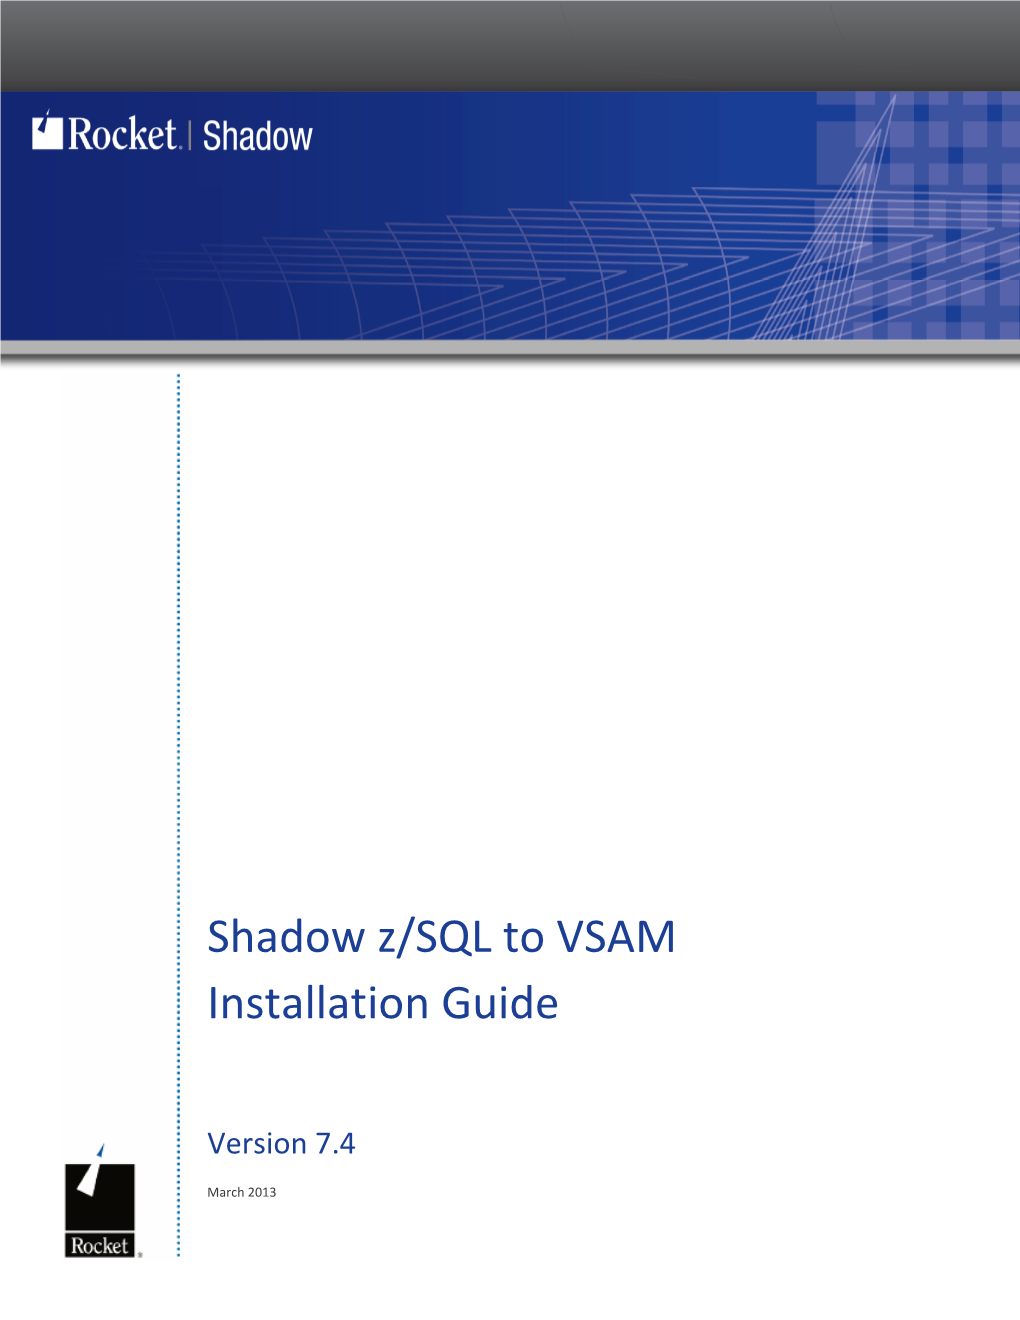 Shadow Z/SQL to VSAM Installation Guide